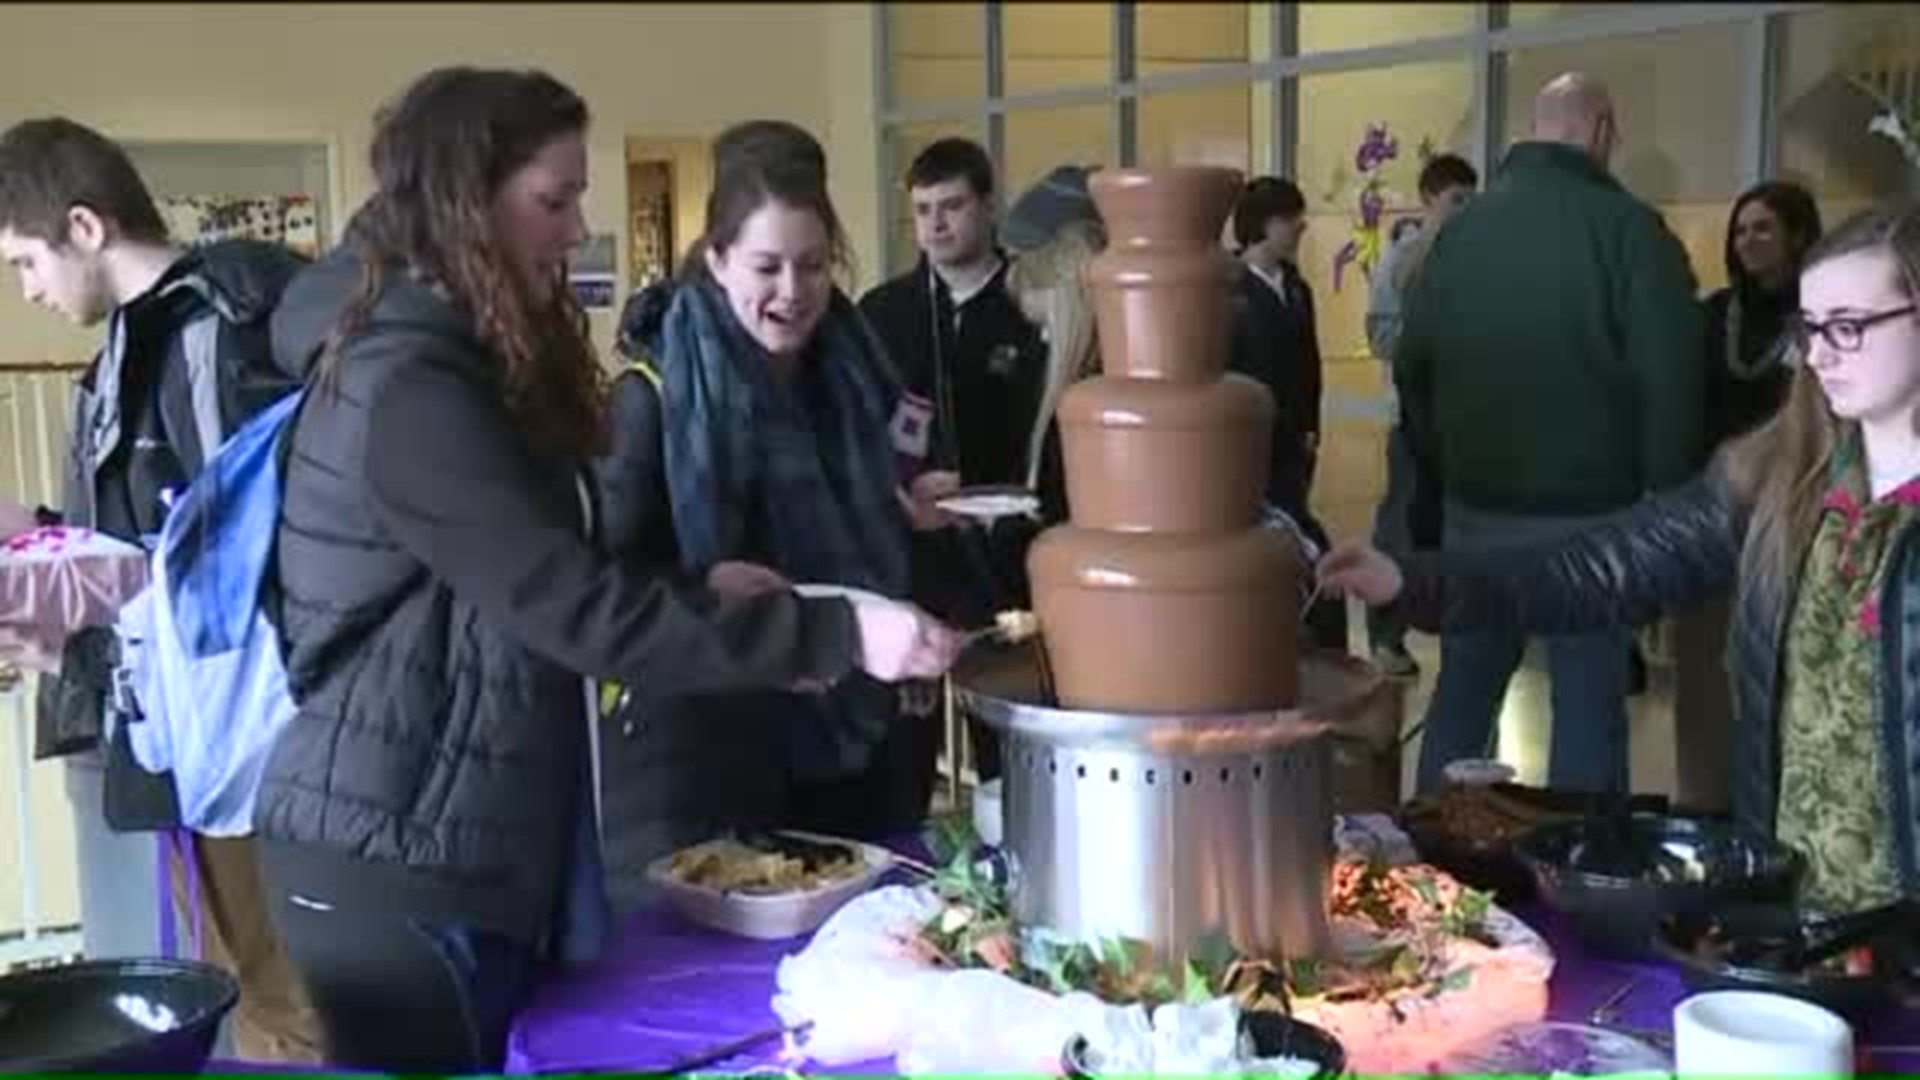 University of Scranton Students Enjoy Chocolate Fountain for Fat Tuesday